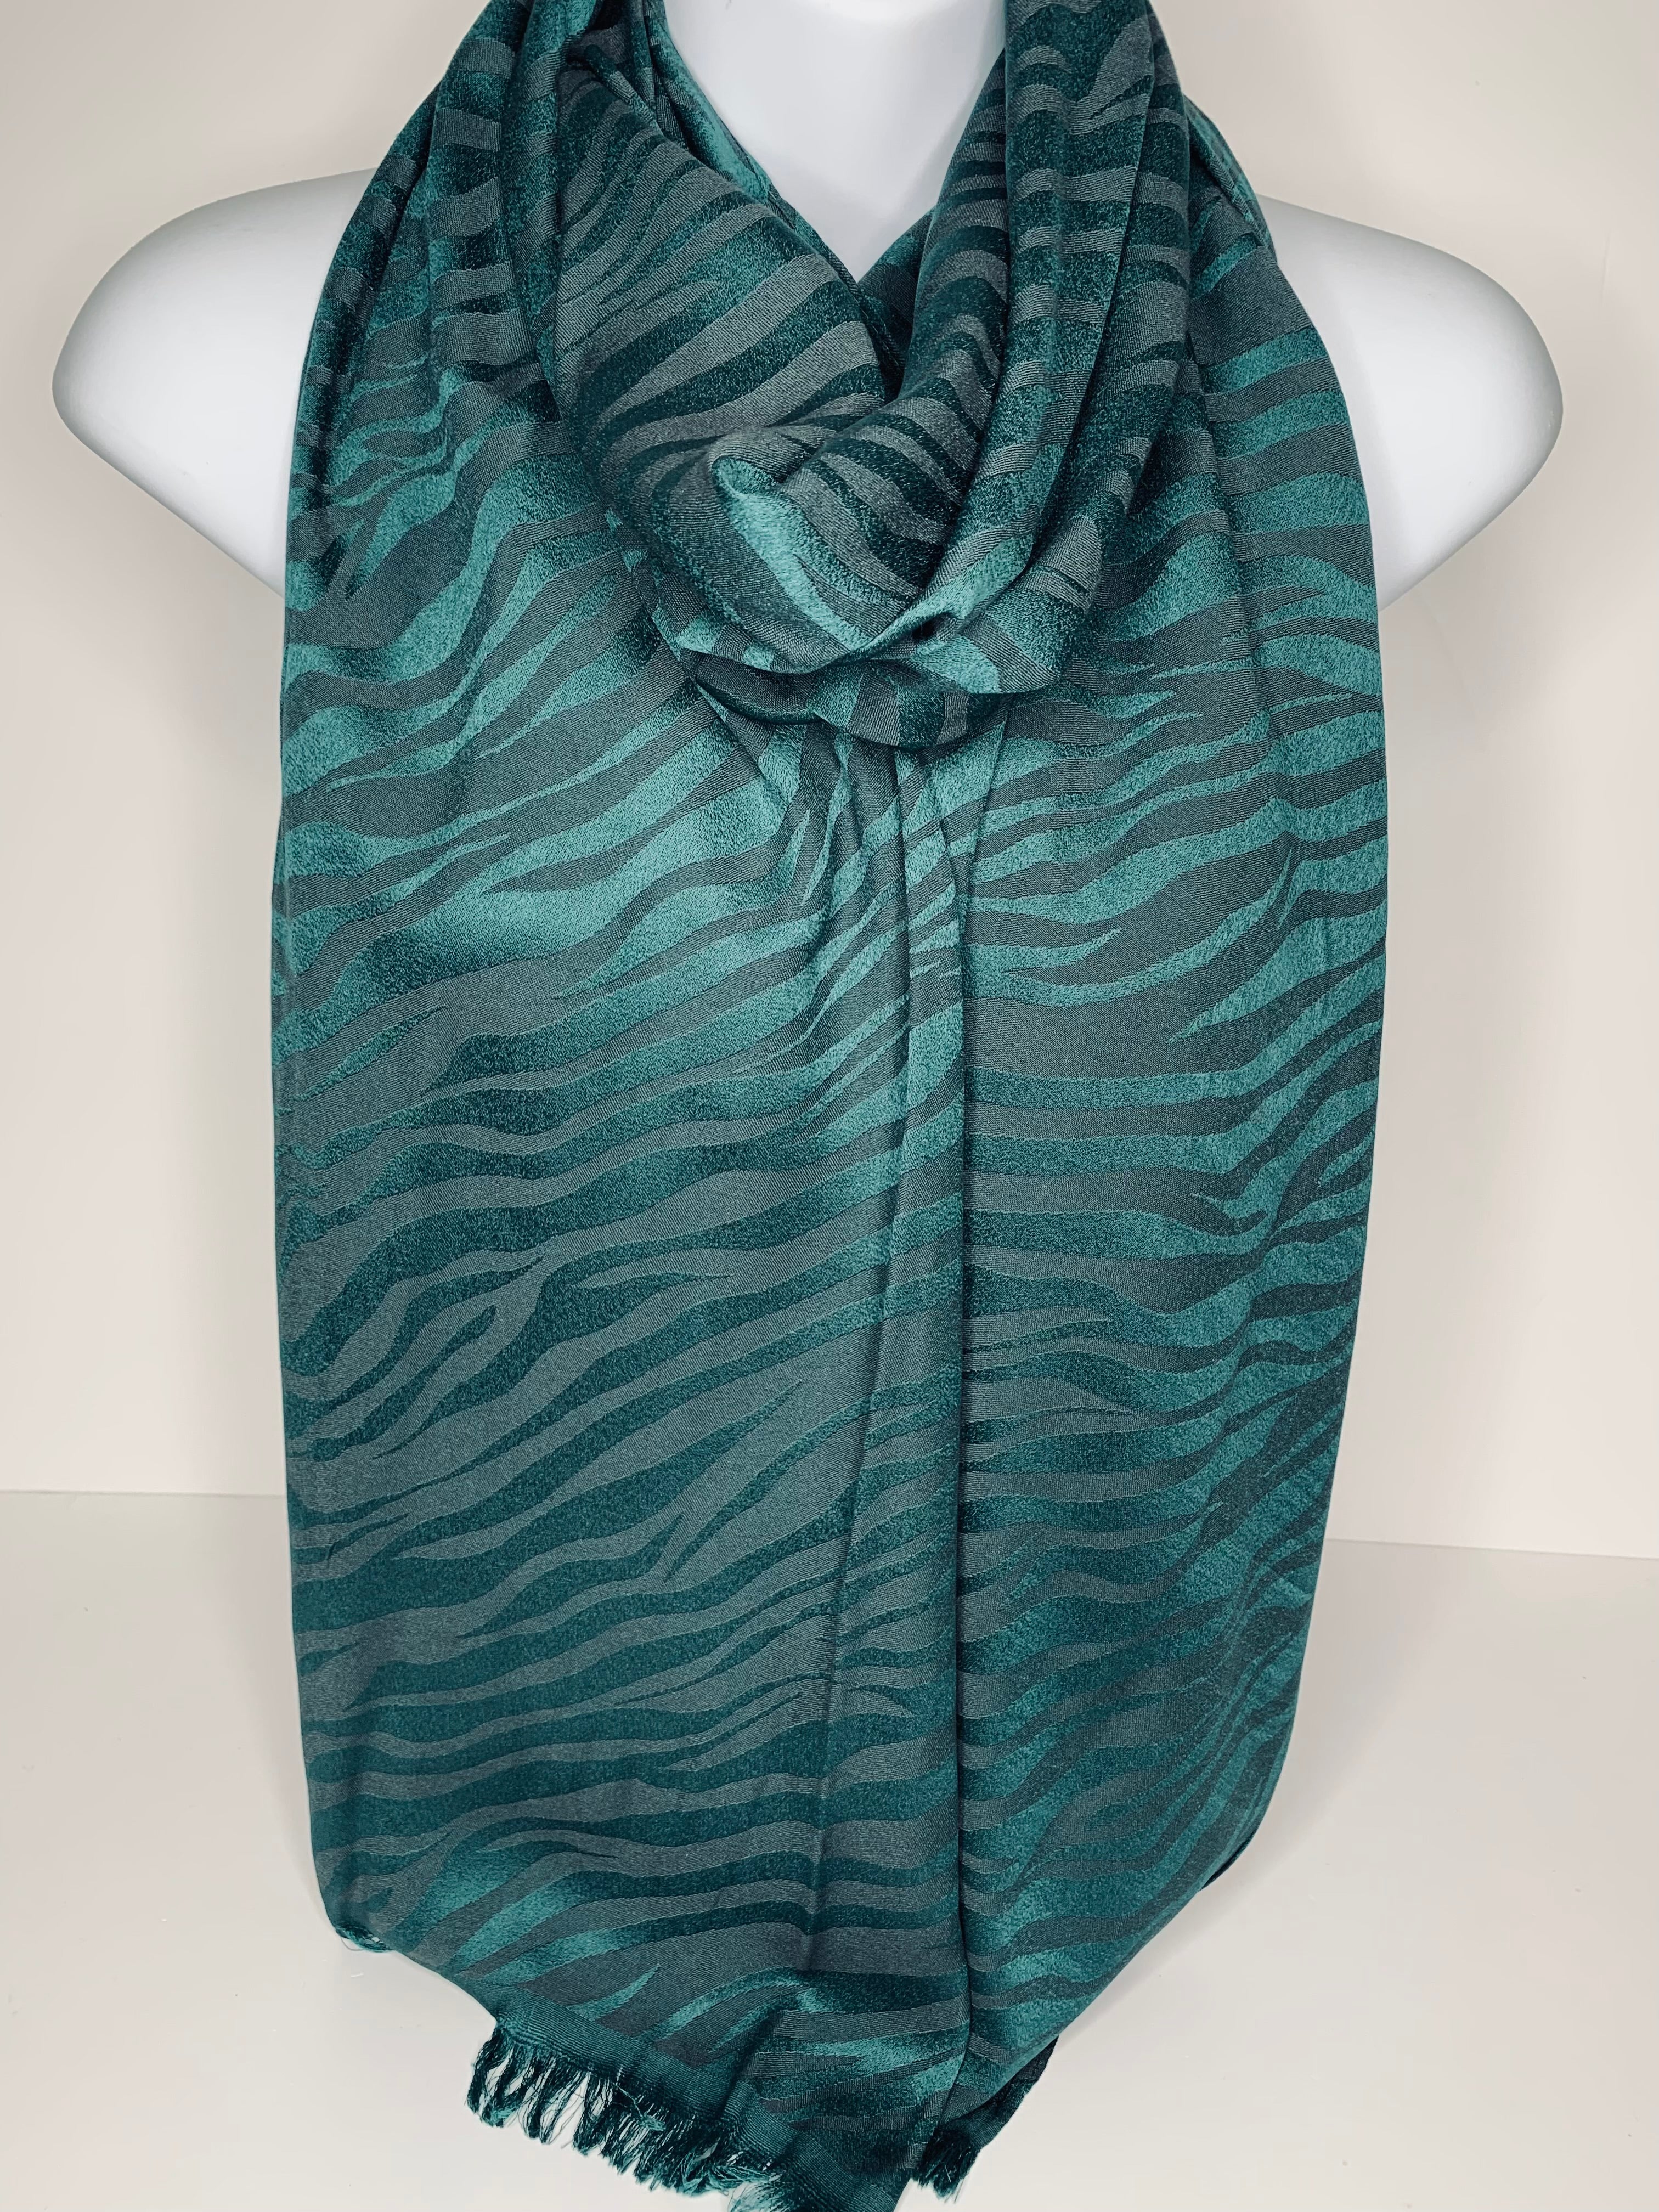 Jade green and grey zebra print scarf